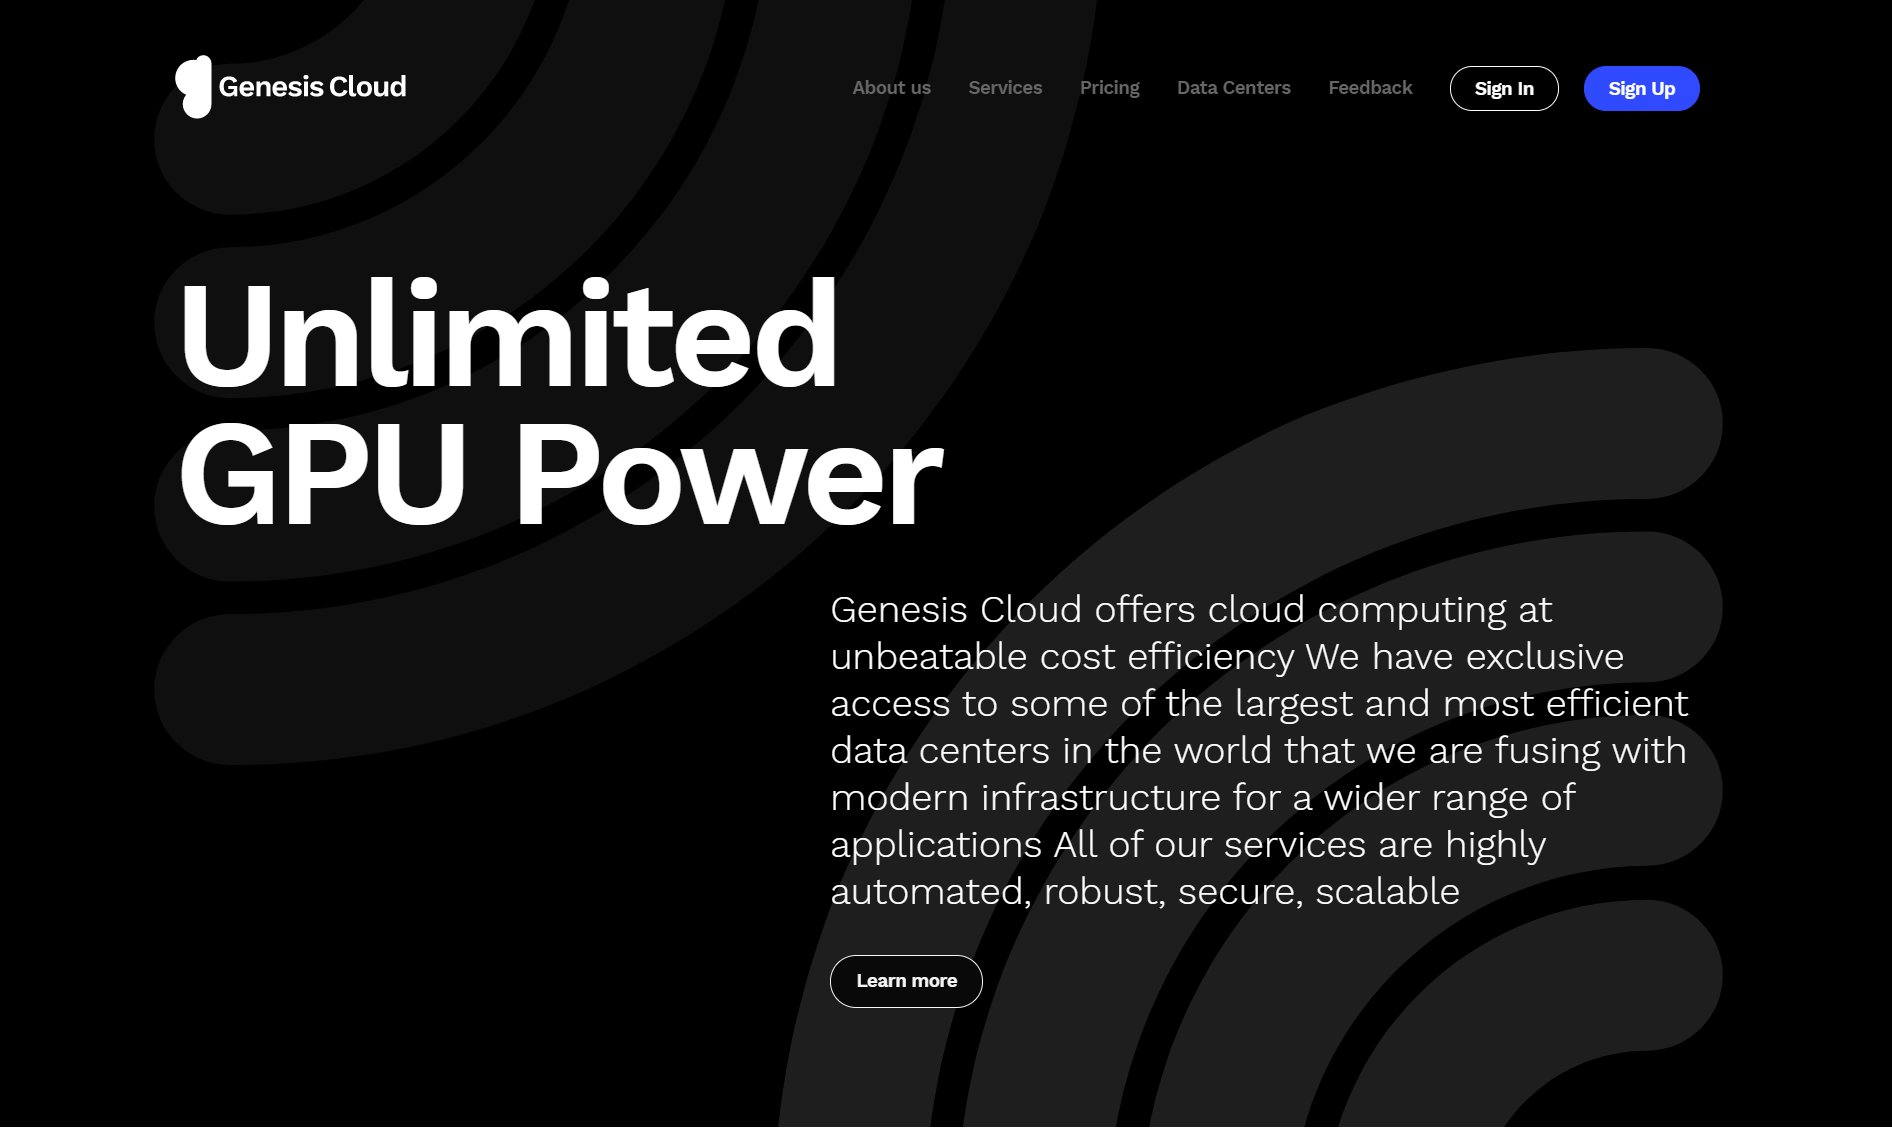 Cloud Computing - Homepage and User Dashboard